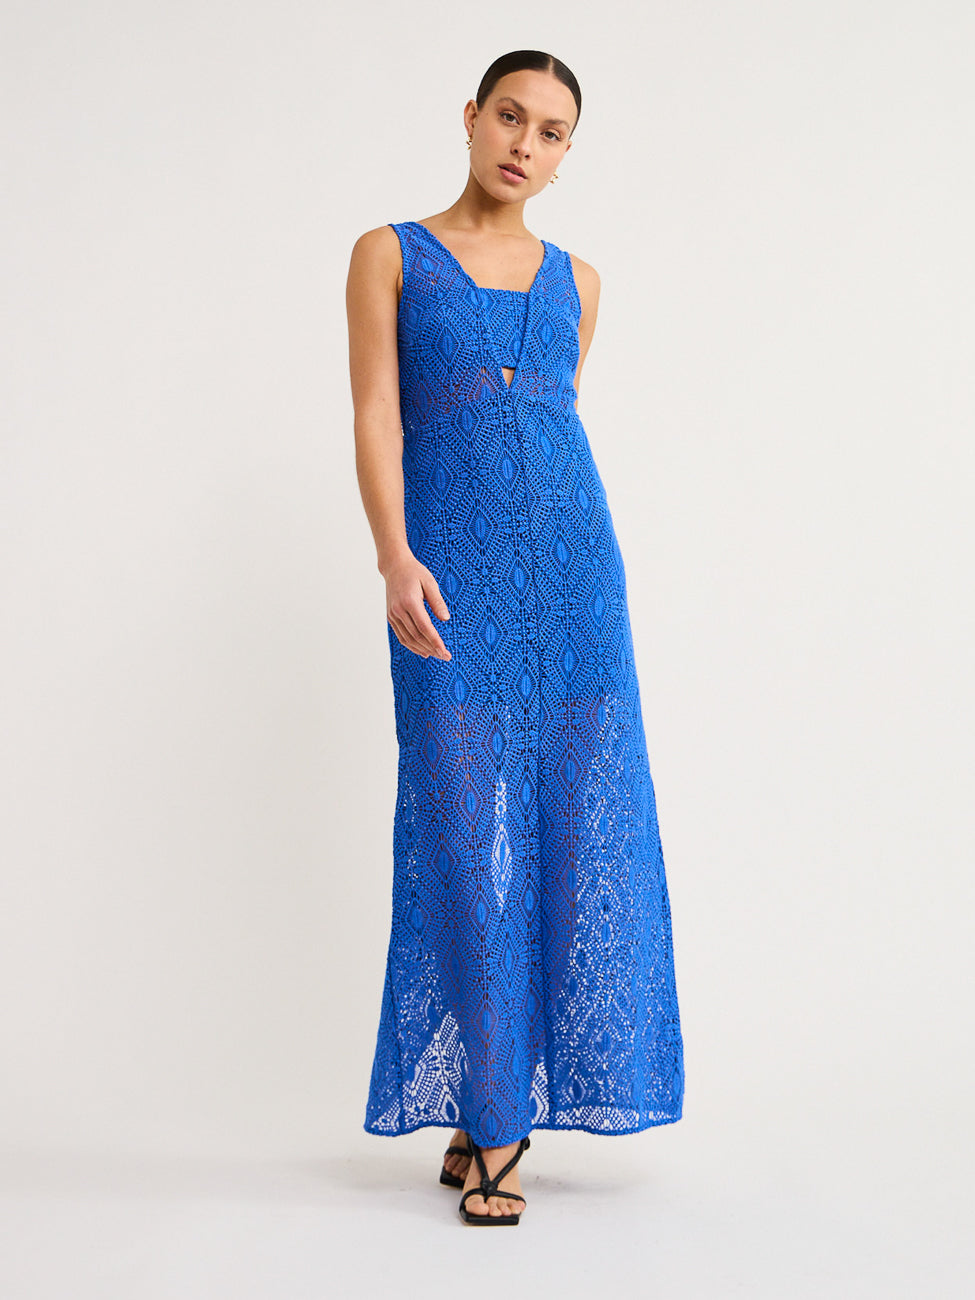 Dahlia Crepe Dress in Cobalt Blue